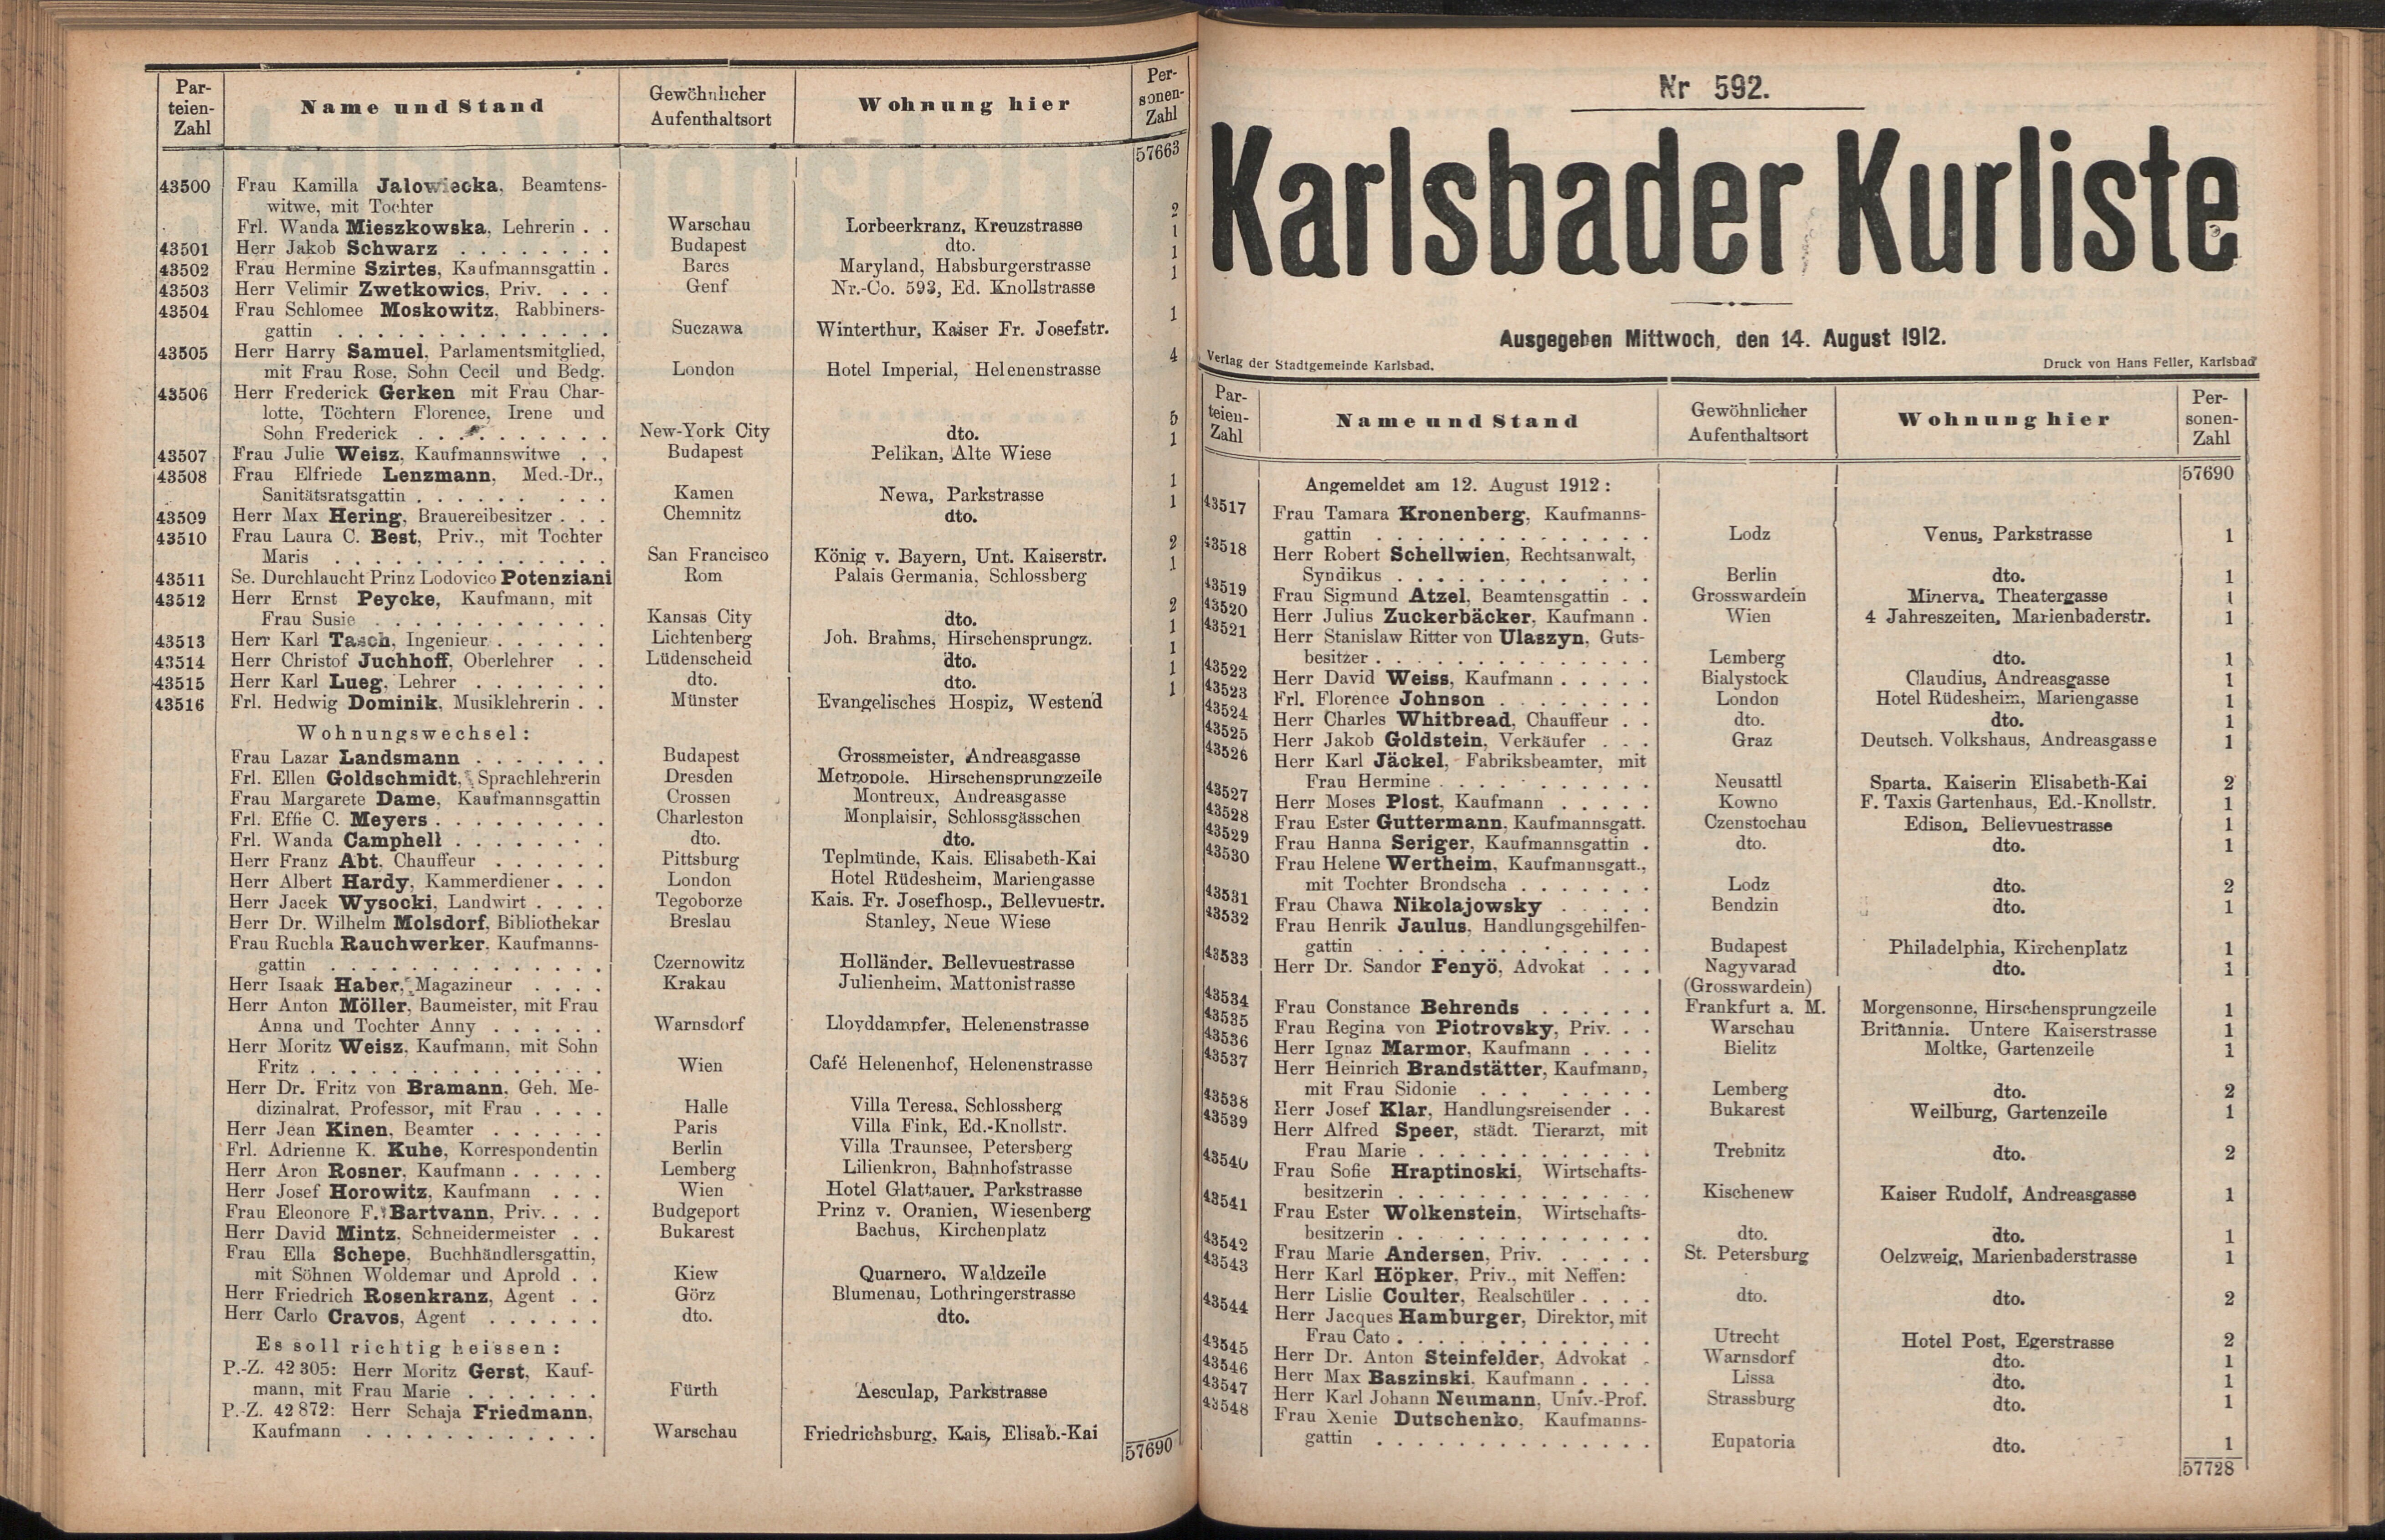 310. soap-kv_knihovna_karlsbader-kurliste-1912-2_3100